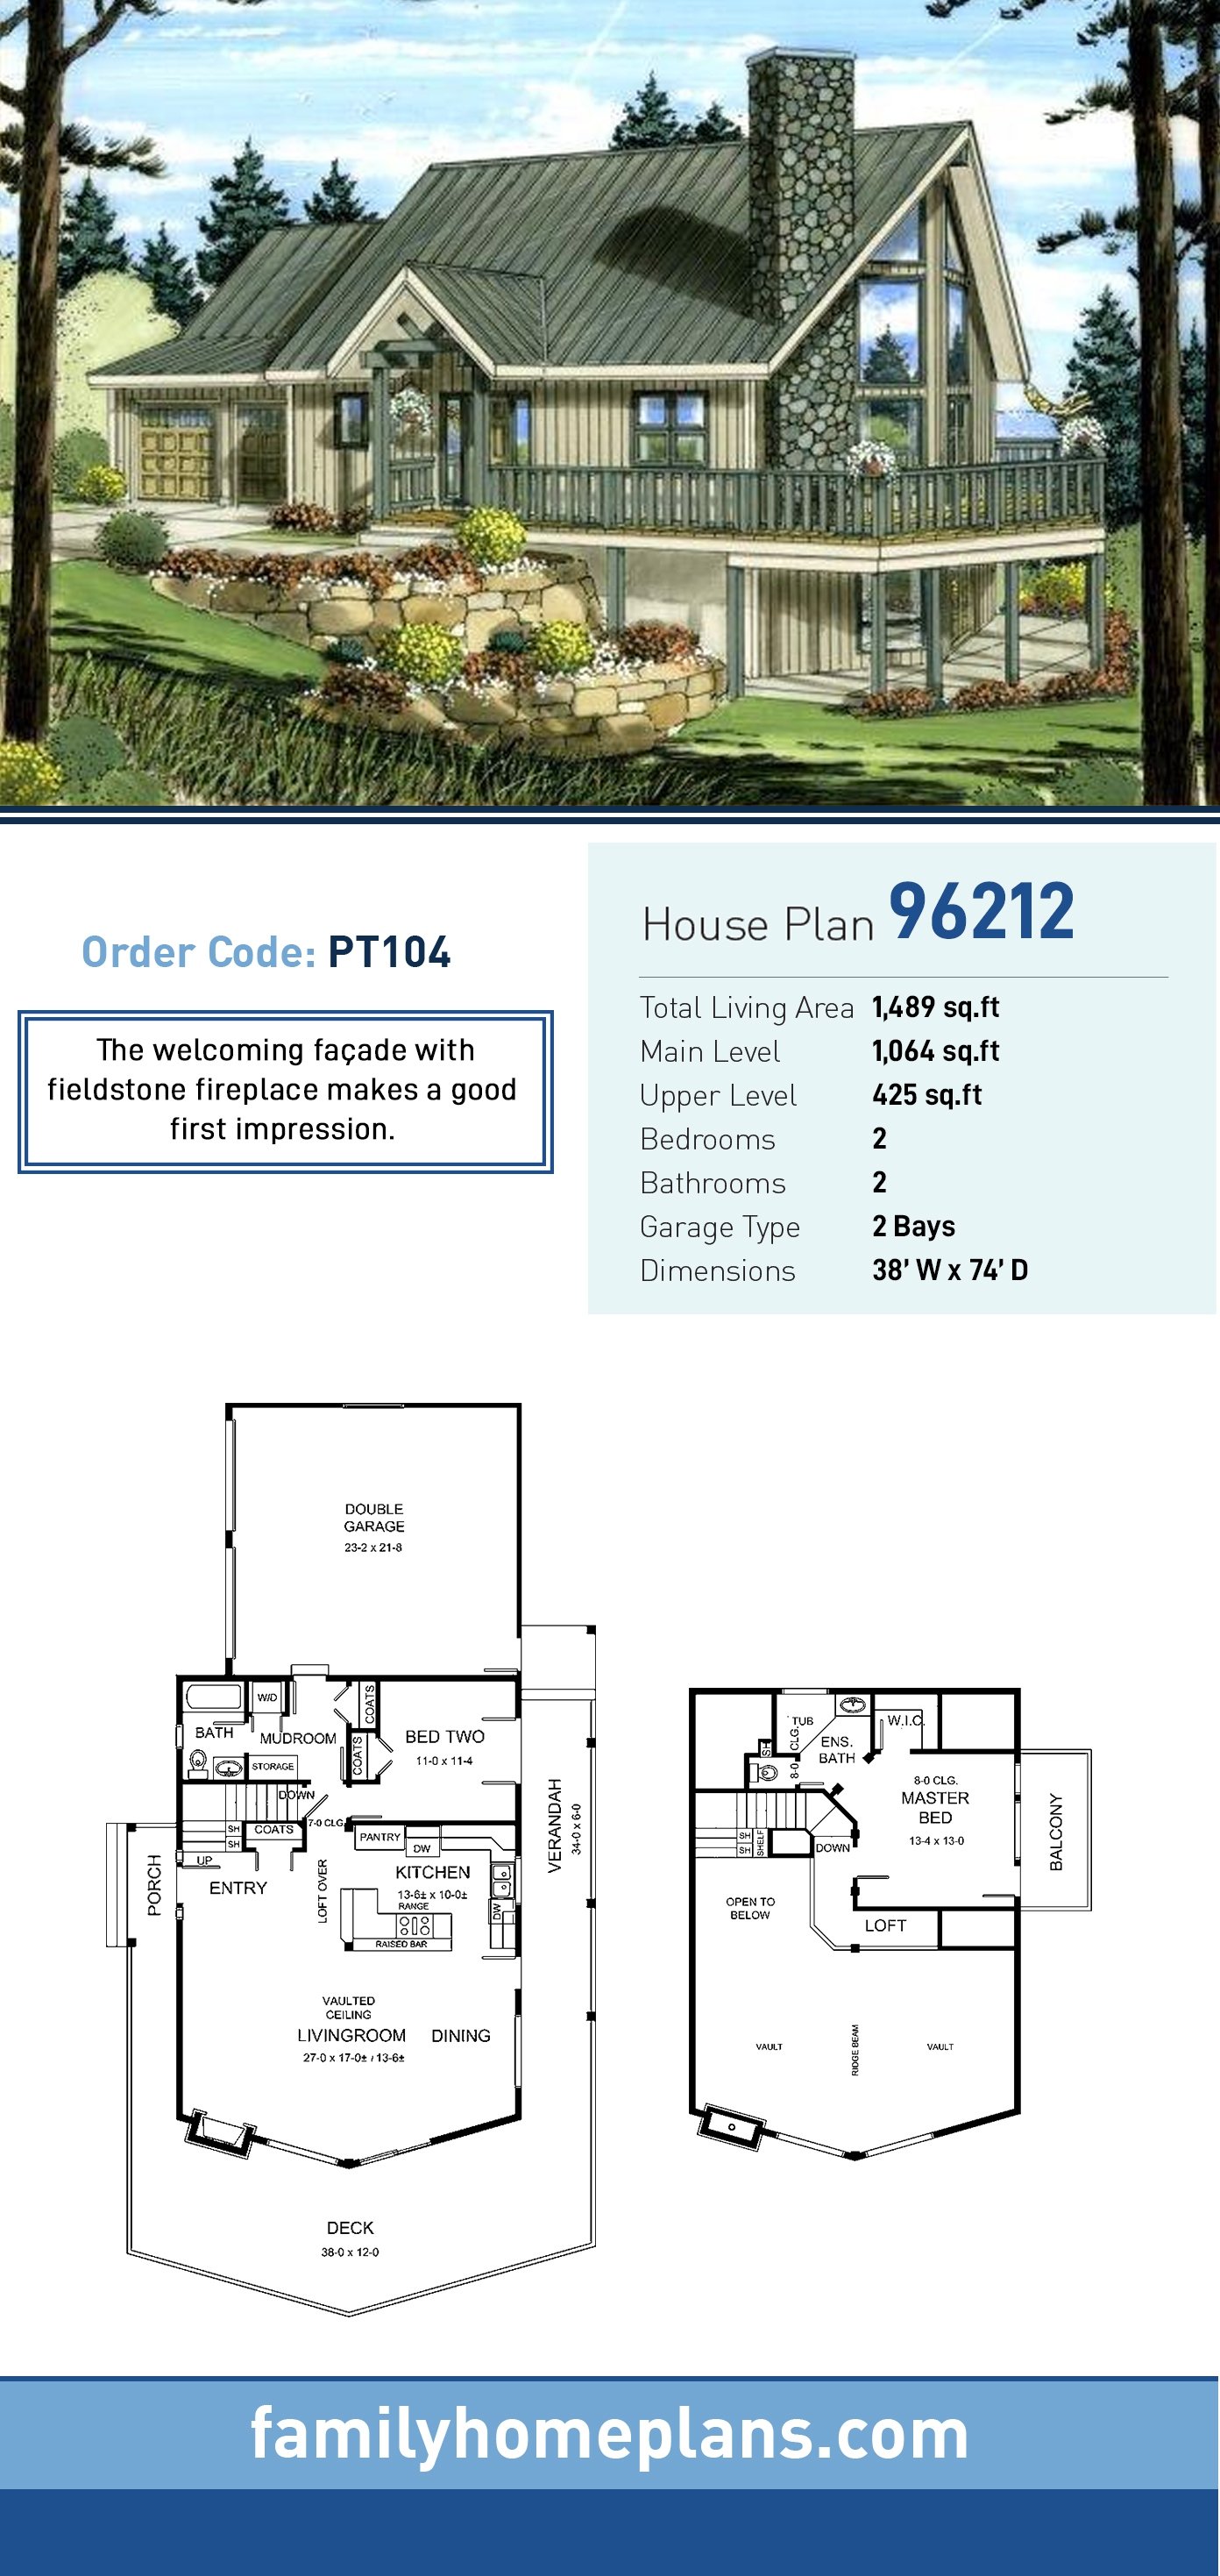 House Plan 96212